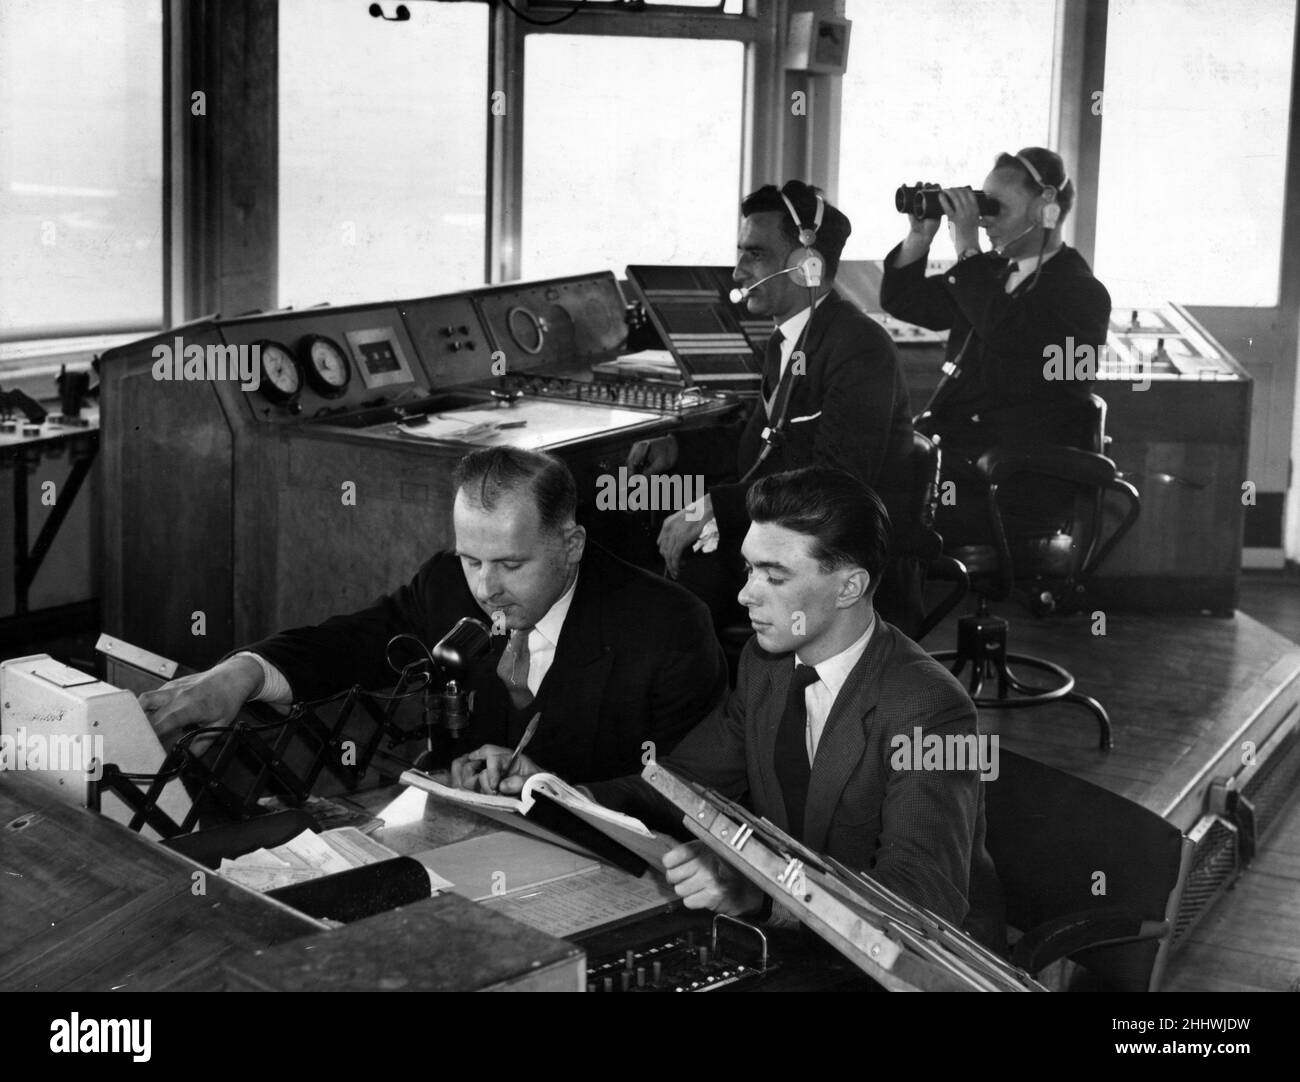 Elmdon Airport Control Tower. Circa 1950. Stock Photo